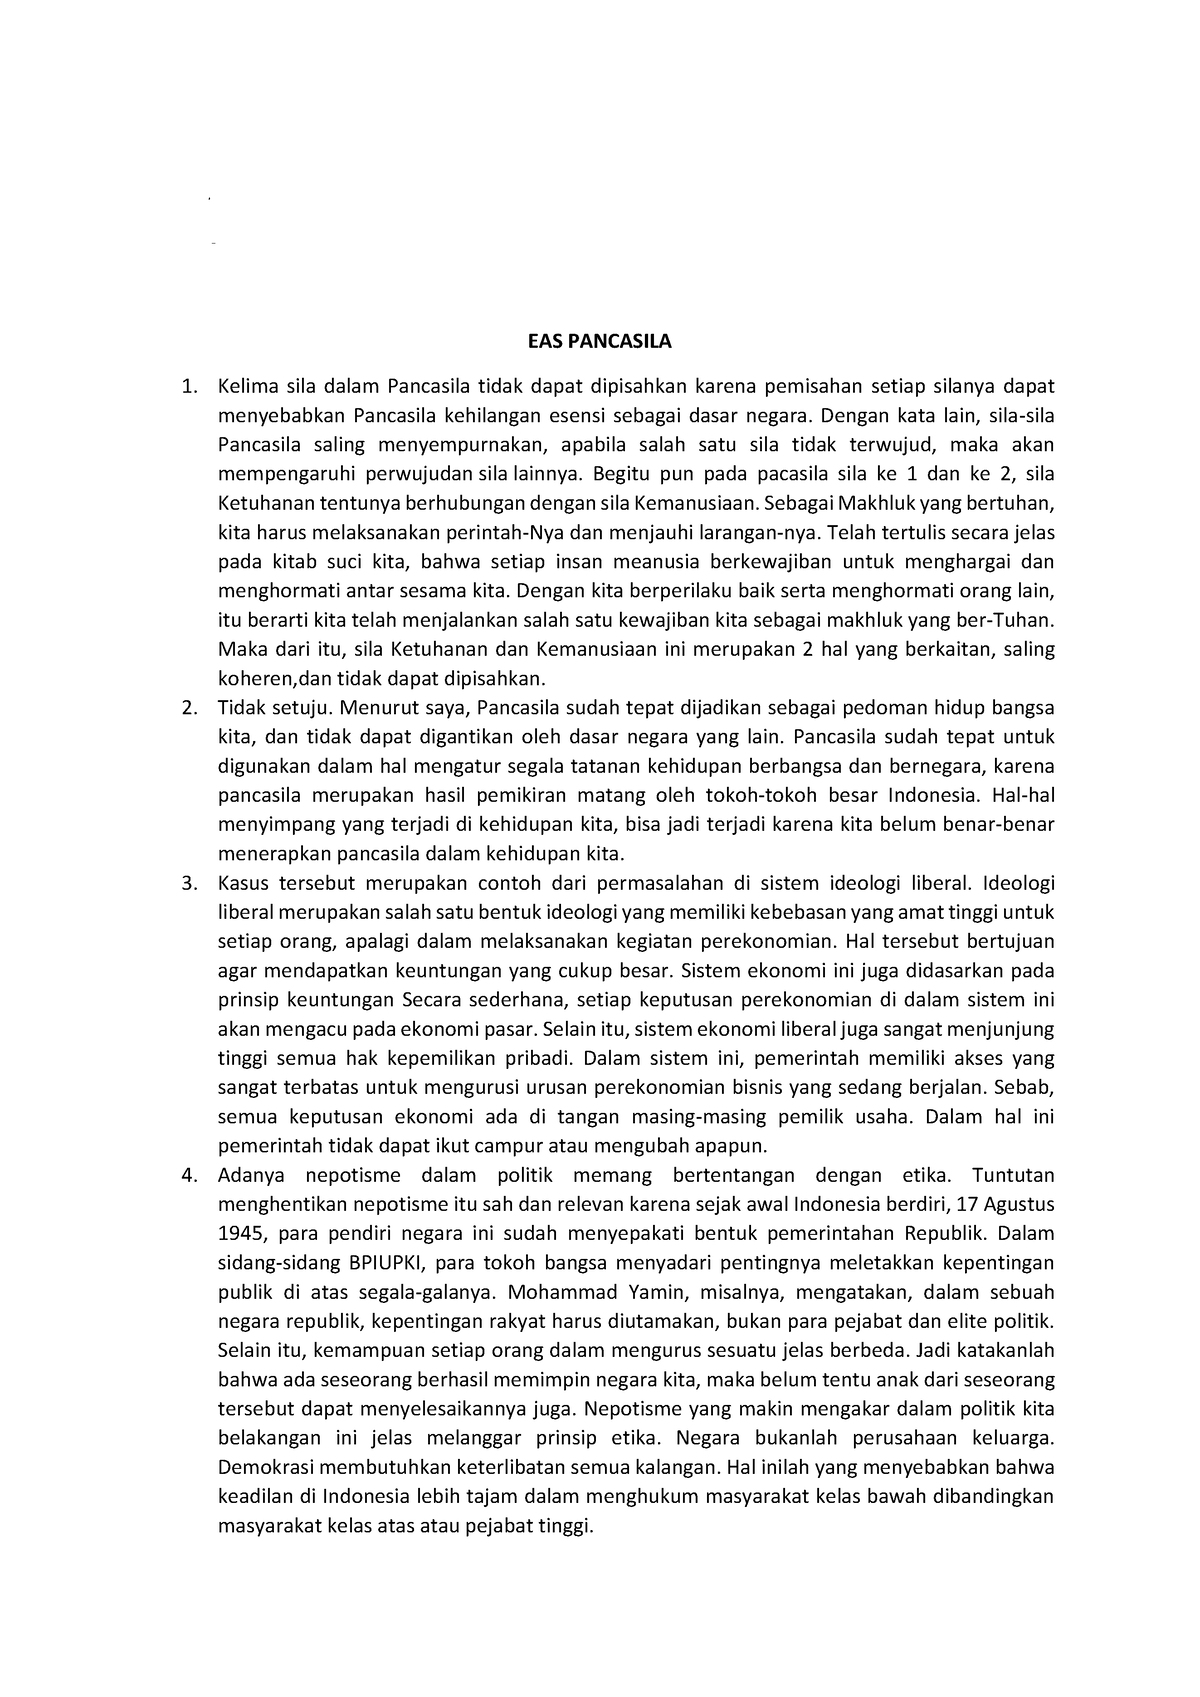 essay tentang pancasila pdf